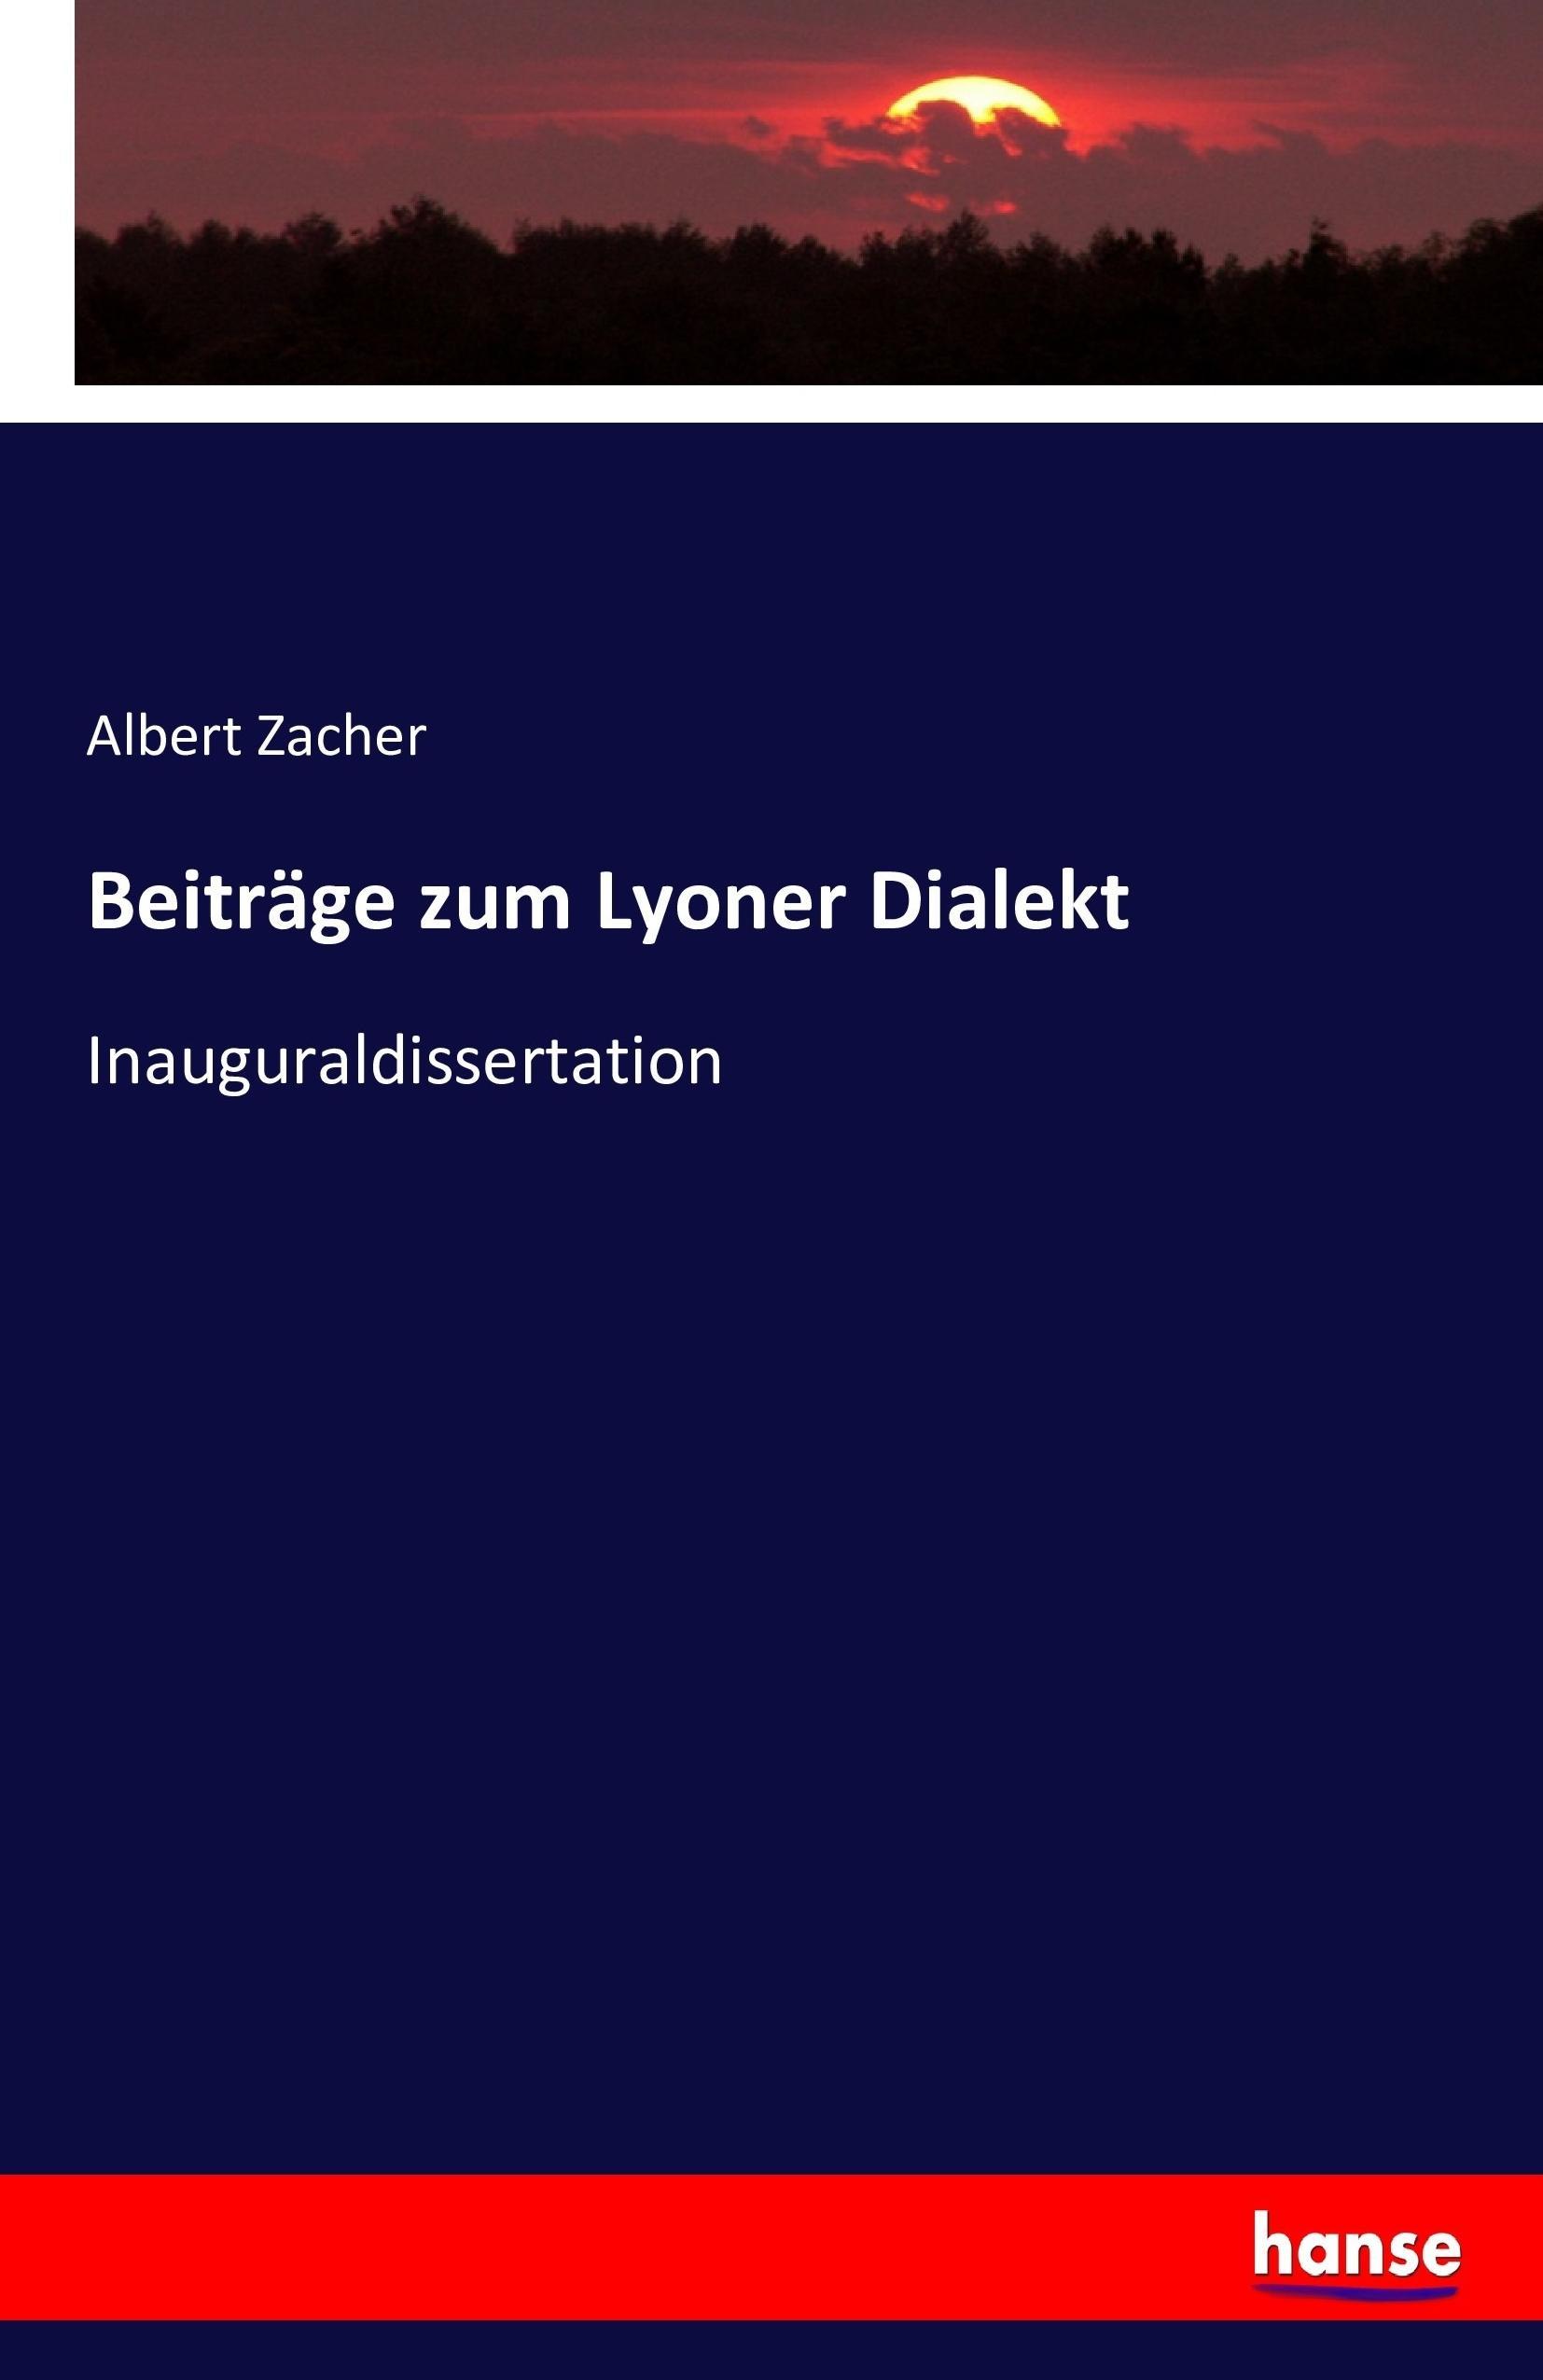 Beitraege zum Lyoner Dialekt - Zacher, Albert